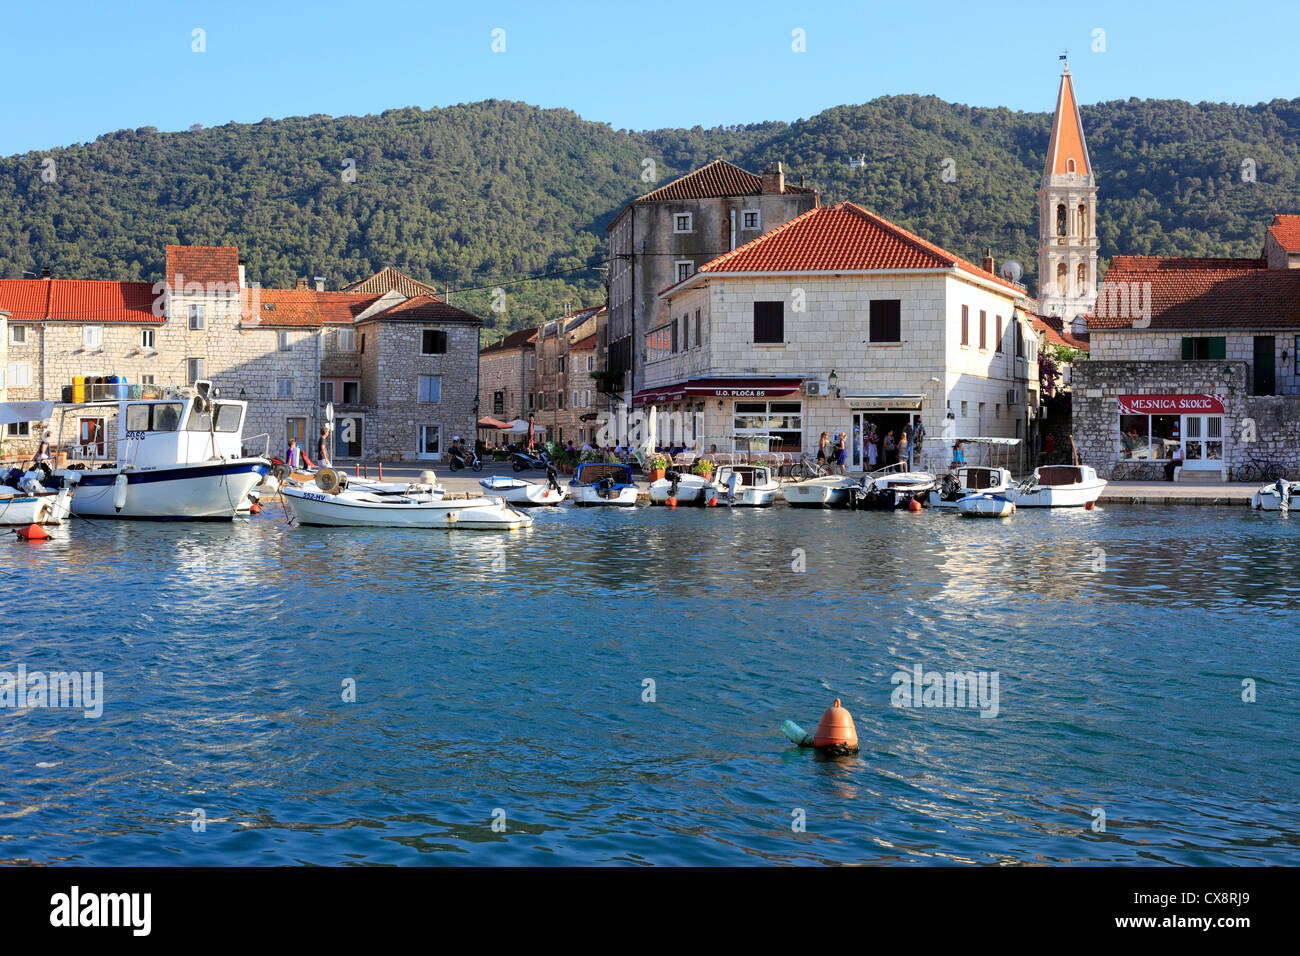 Harbor, Stari Grad, Island of Hvar, Dalmatian coast, Croatia Stock Photo